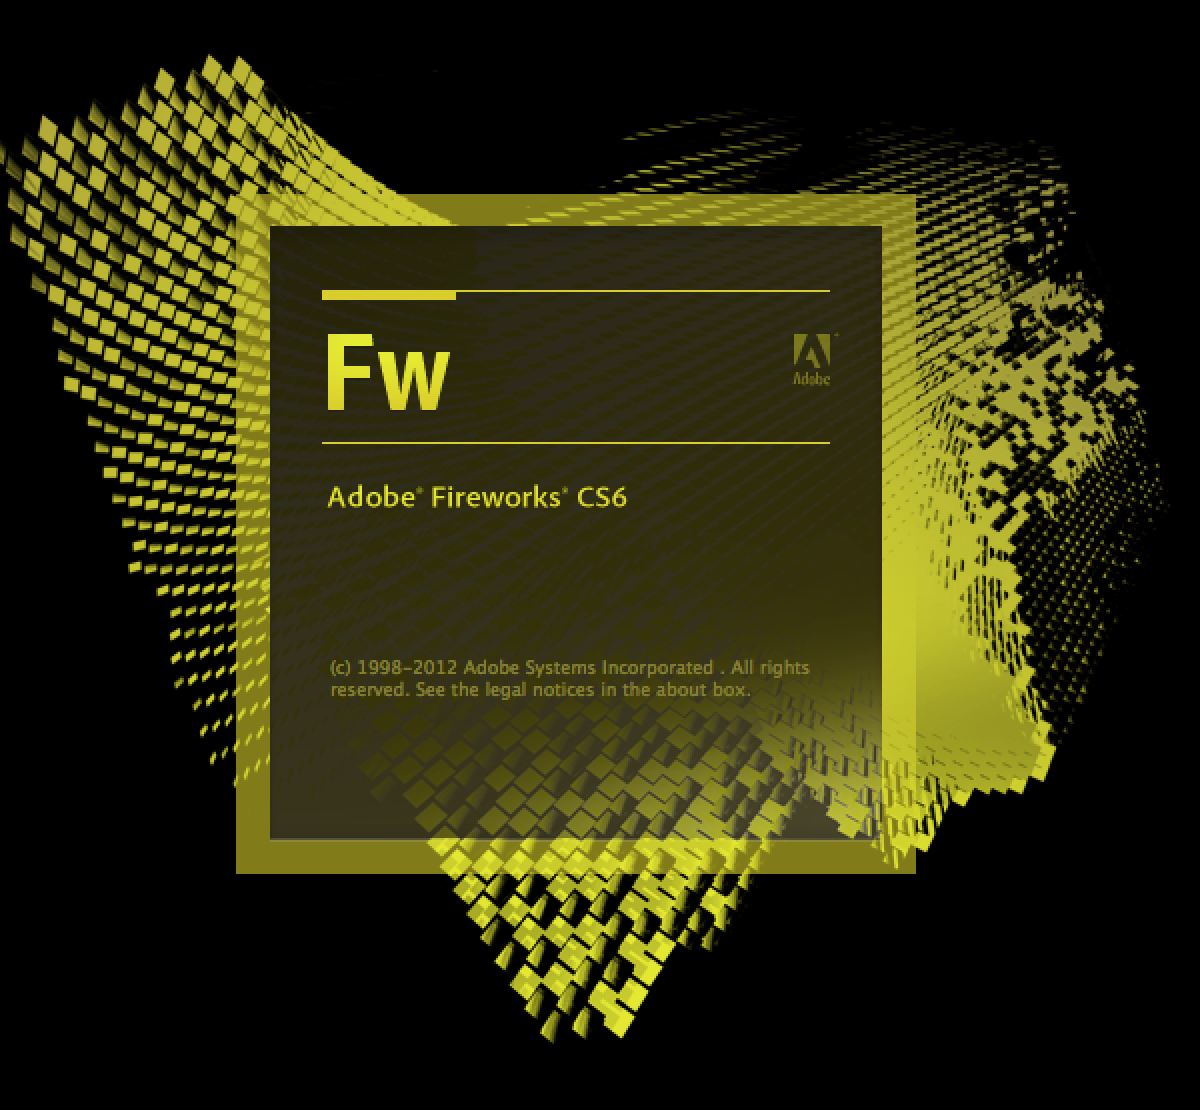 Adobe creative download. Adobe Fireworks. Adobe Fireworks cs6. Adobe Creative Suite 6. Fireworks программа.